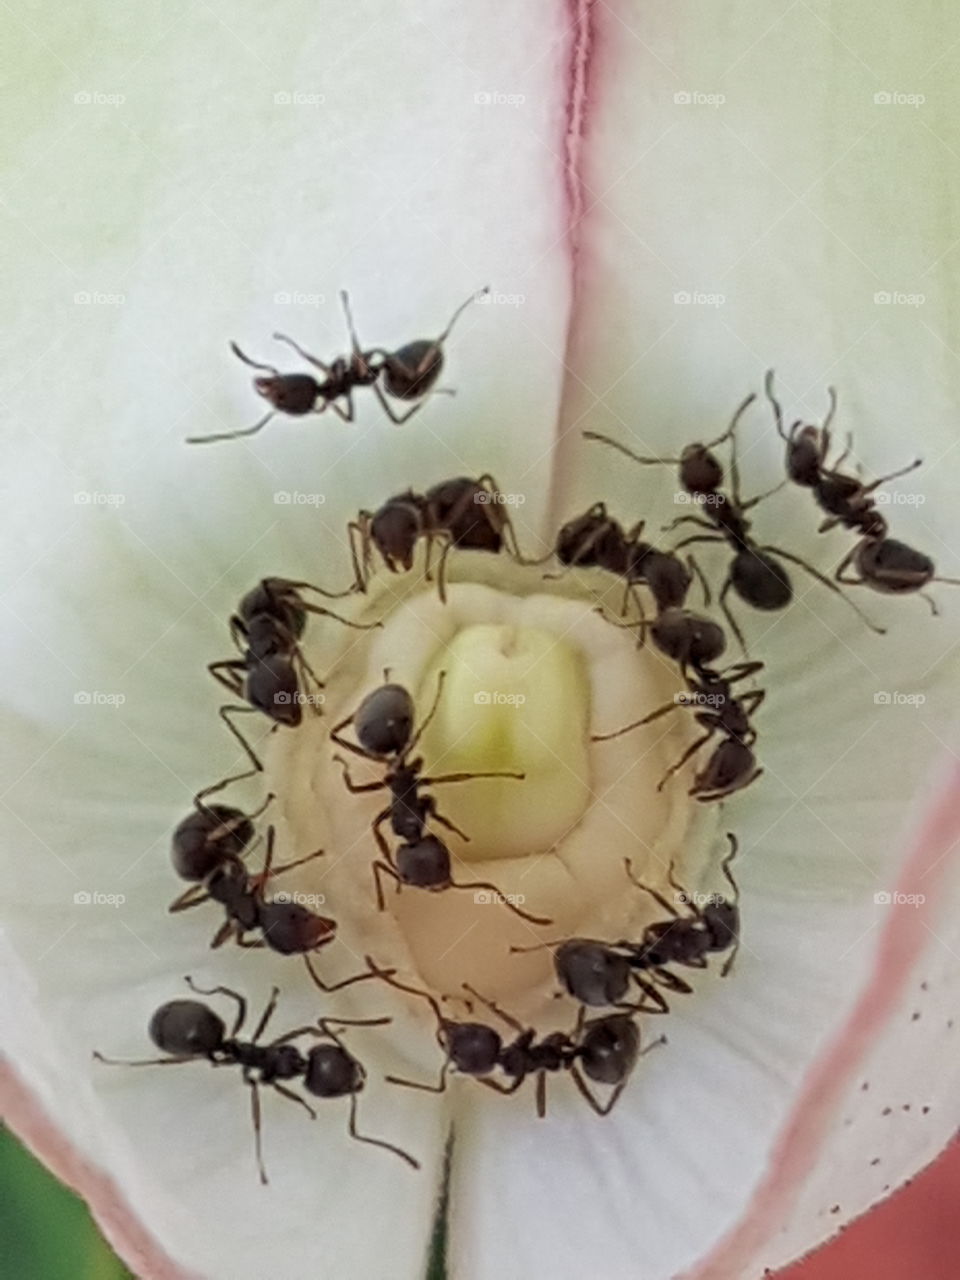 Ants at work, harvesting nectar.